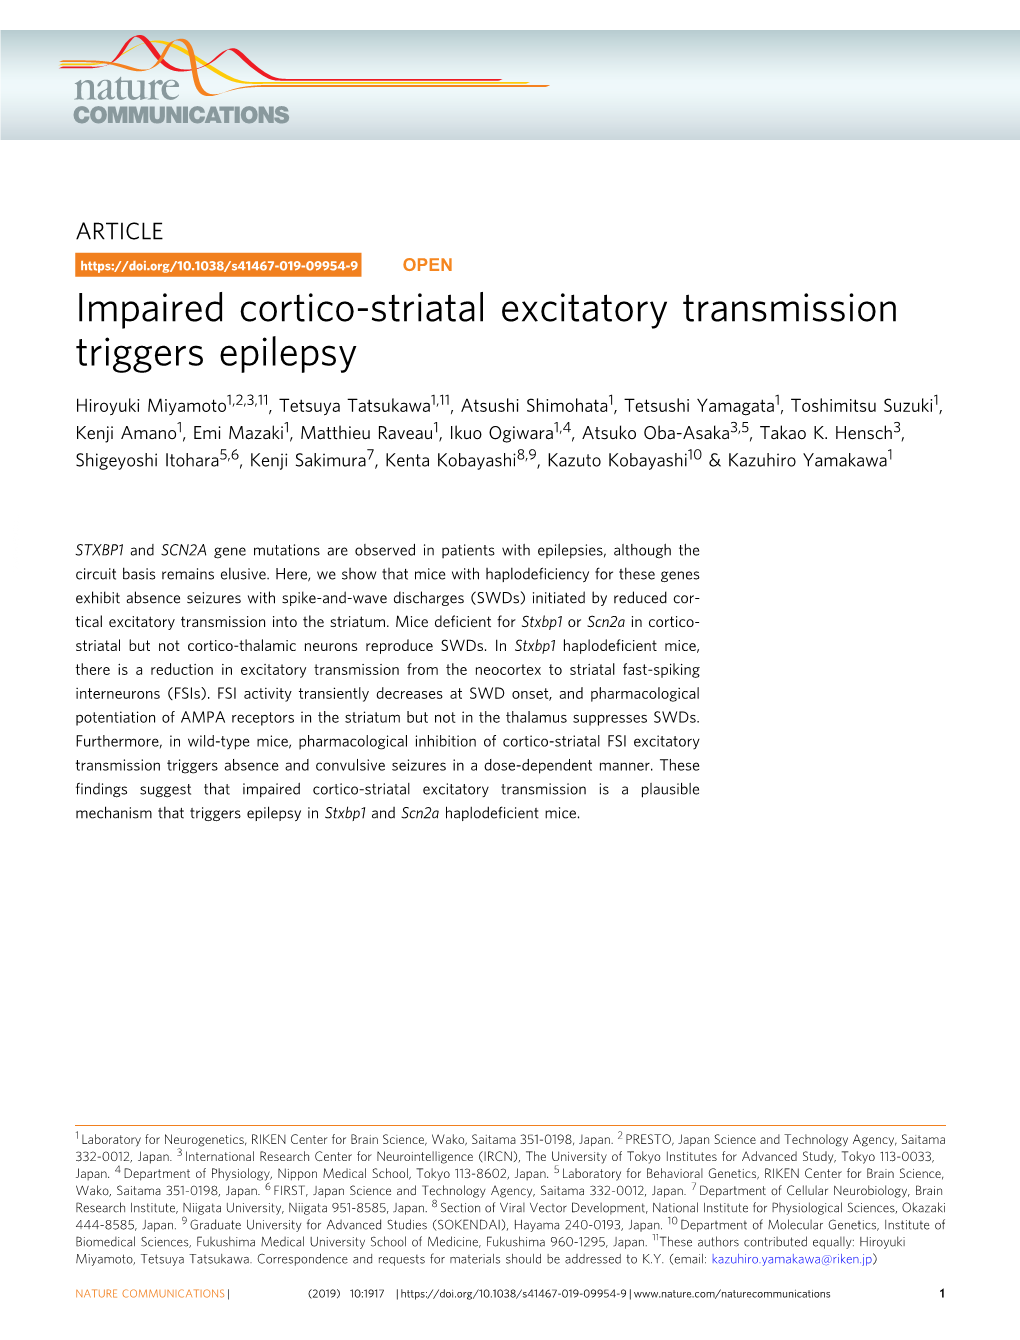 Impaired Cortico-Striatal Excitatory Transmission Triggers Epilepsy